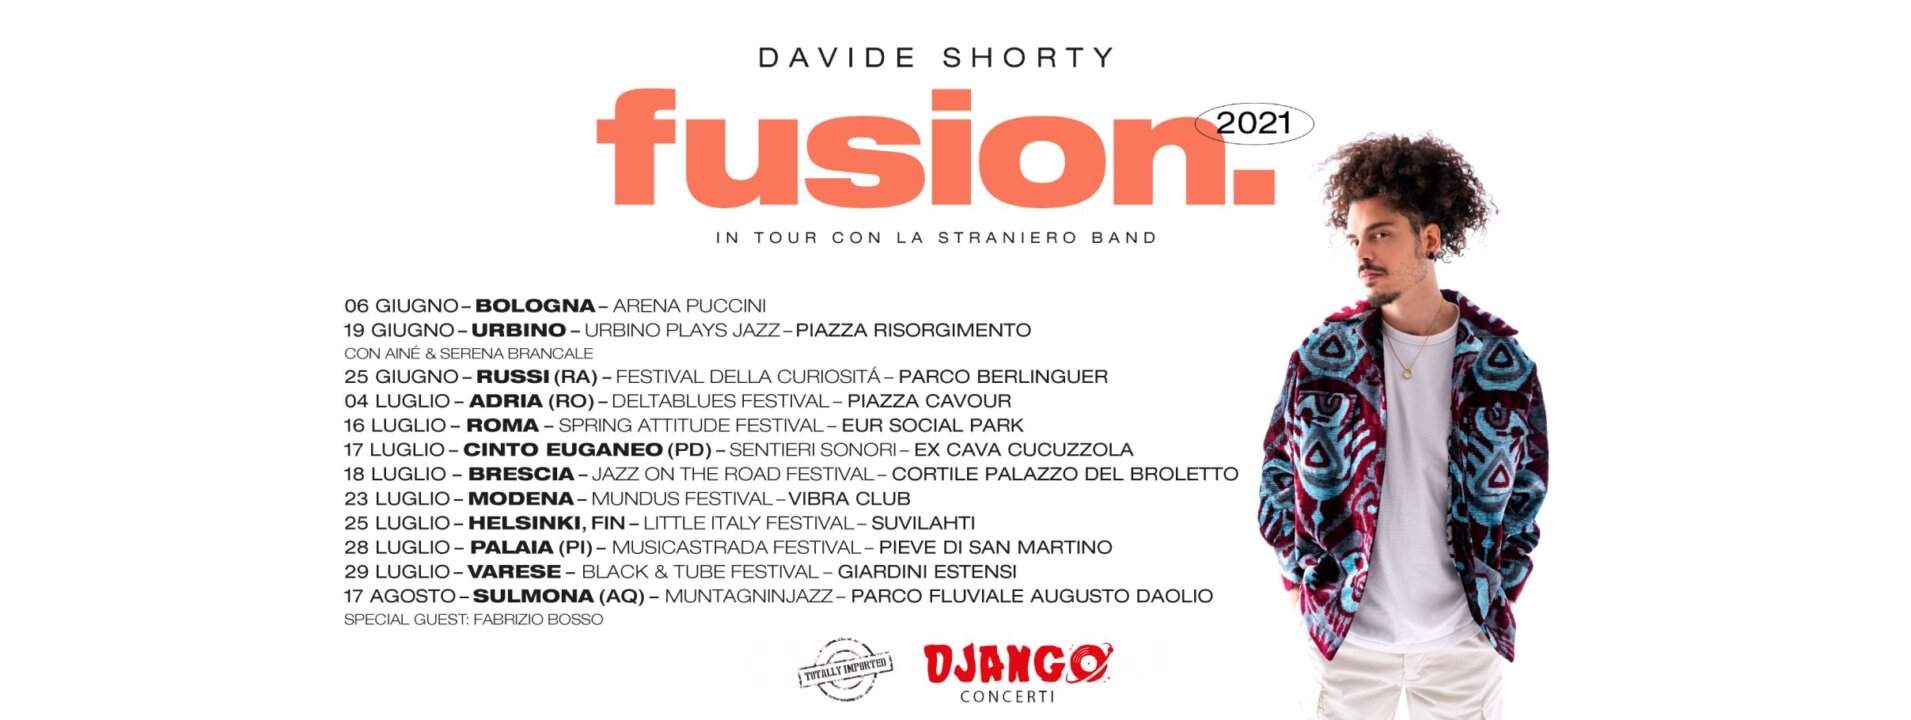 Davide Shorty_fusion_tour_b